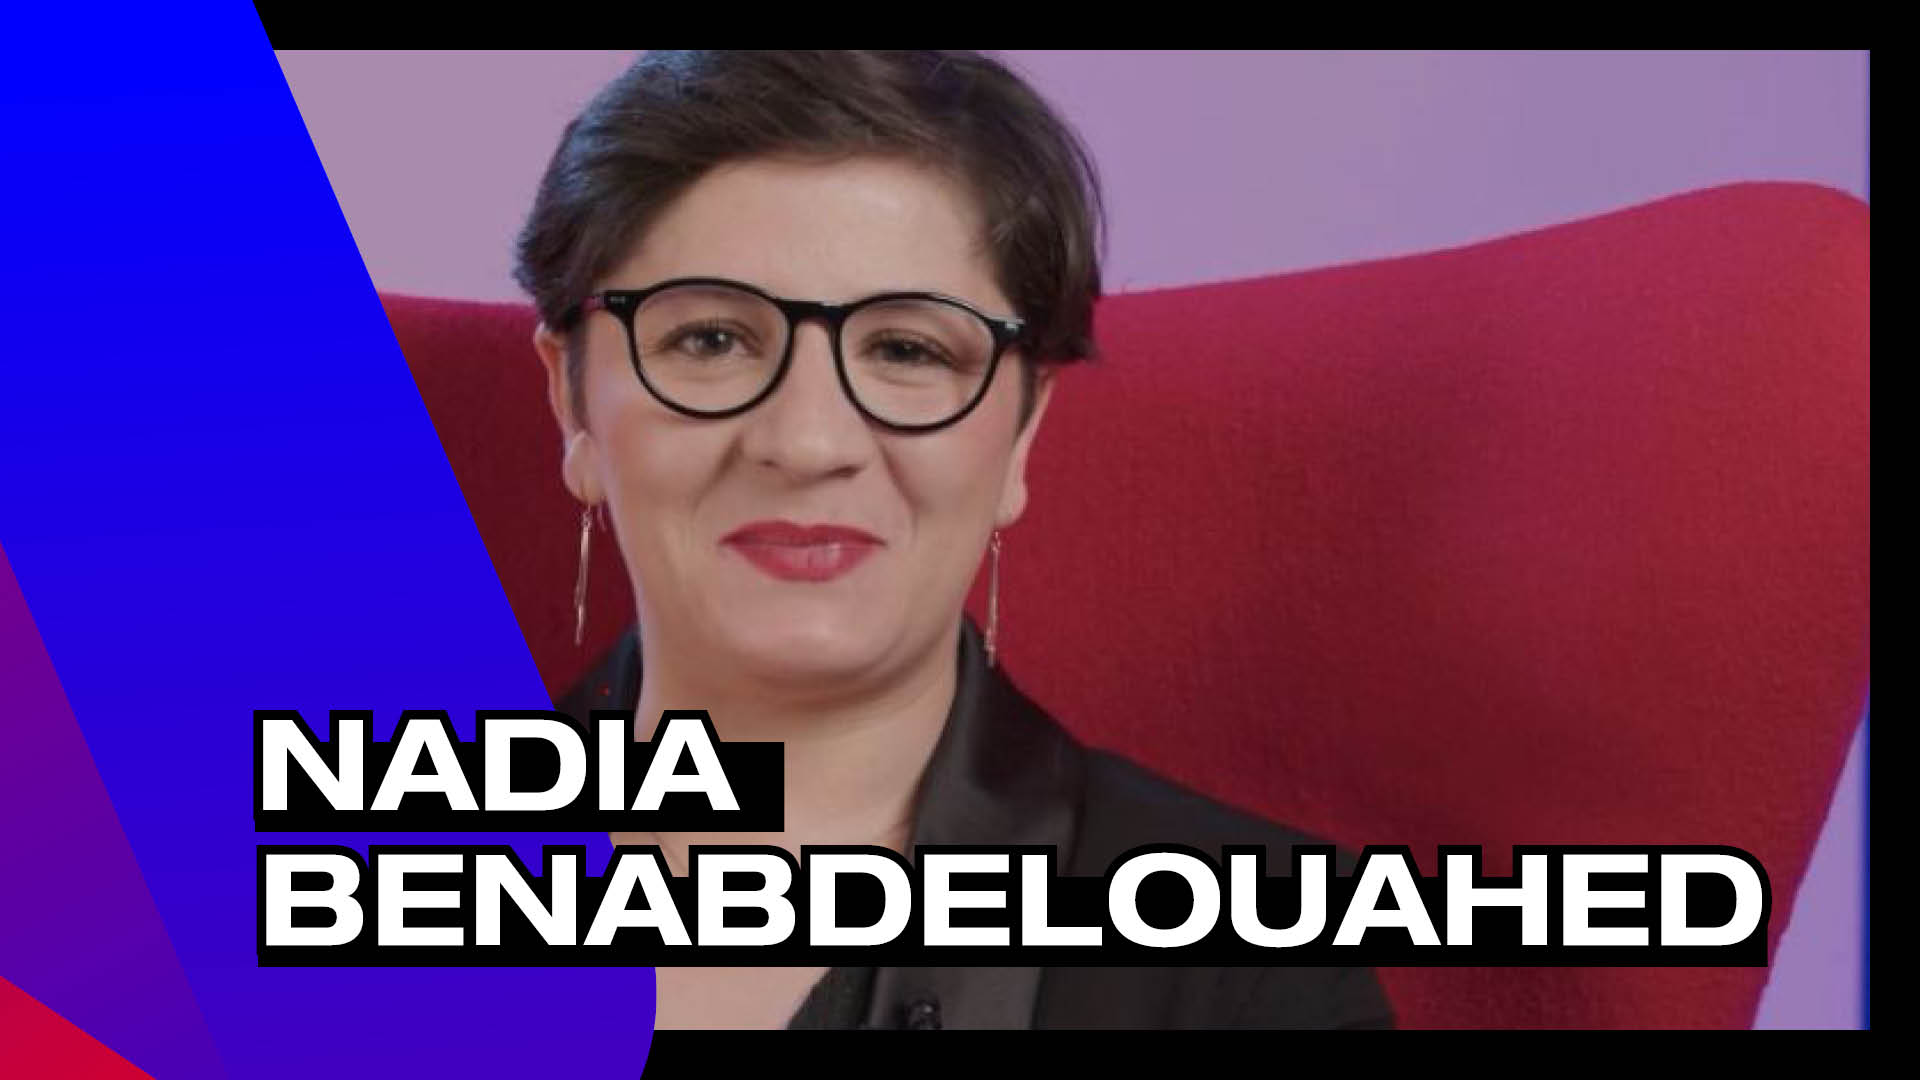 Nadia Benabdelouahed